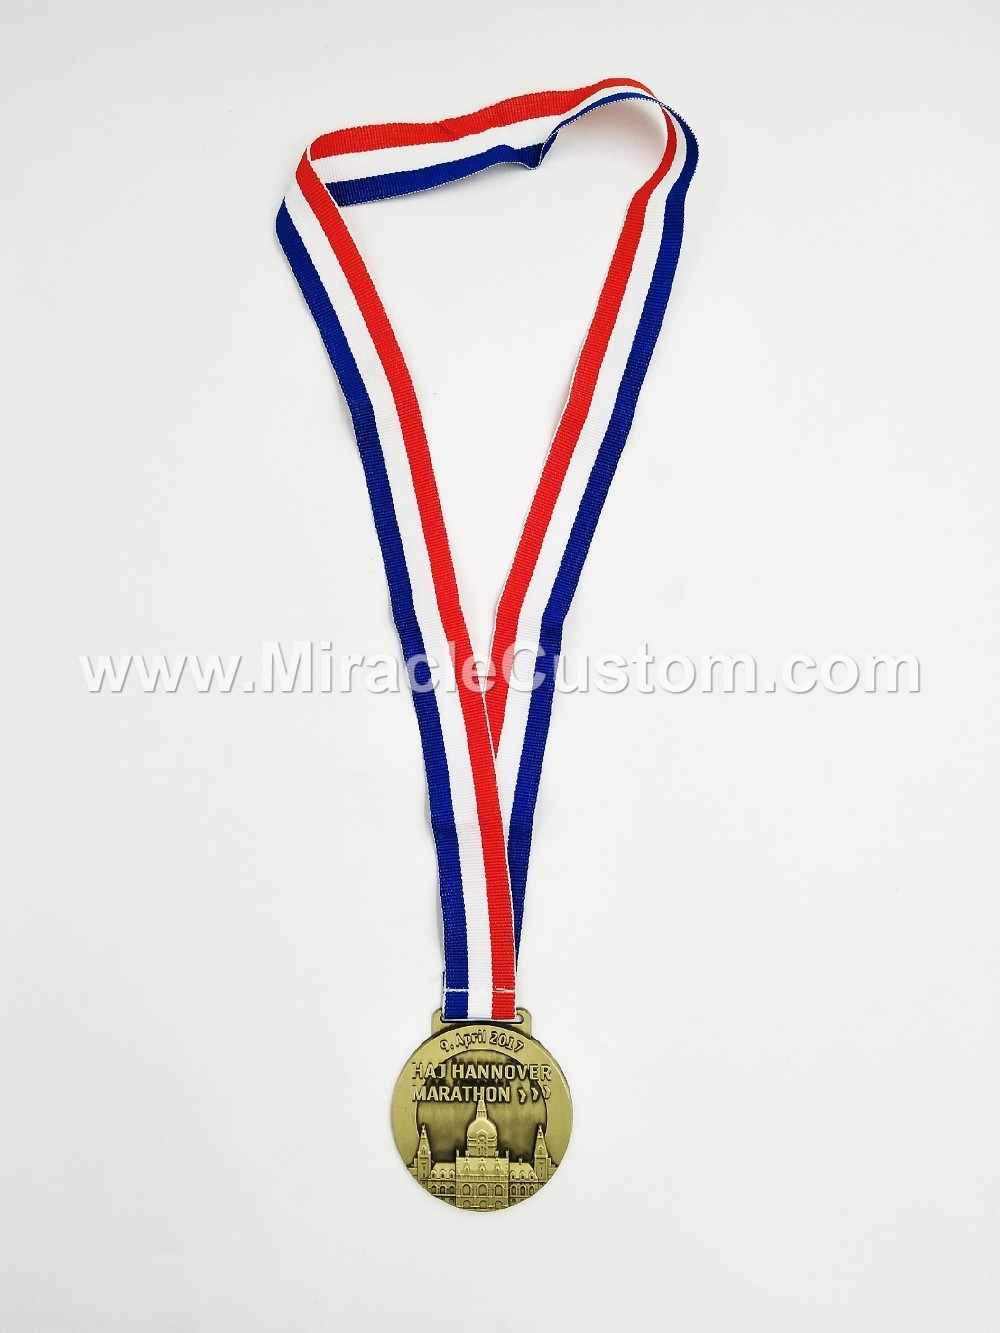 custom logo marathon medals